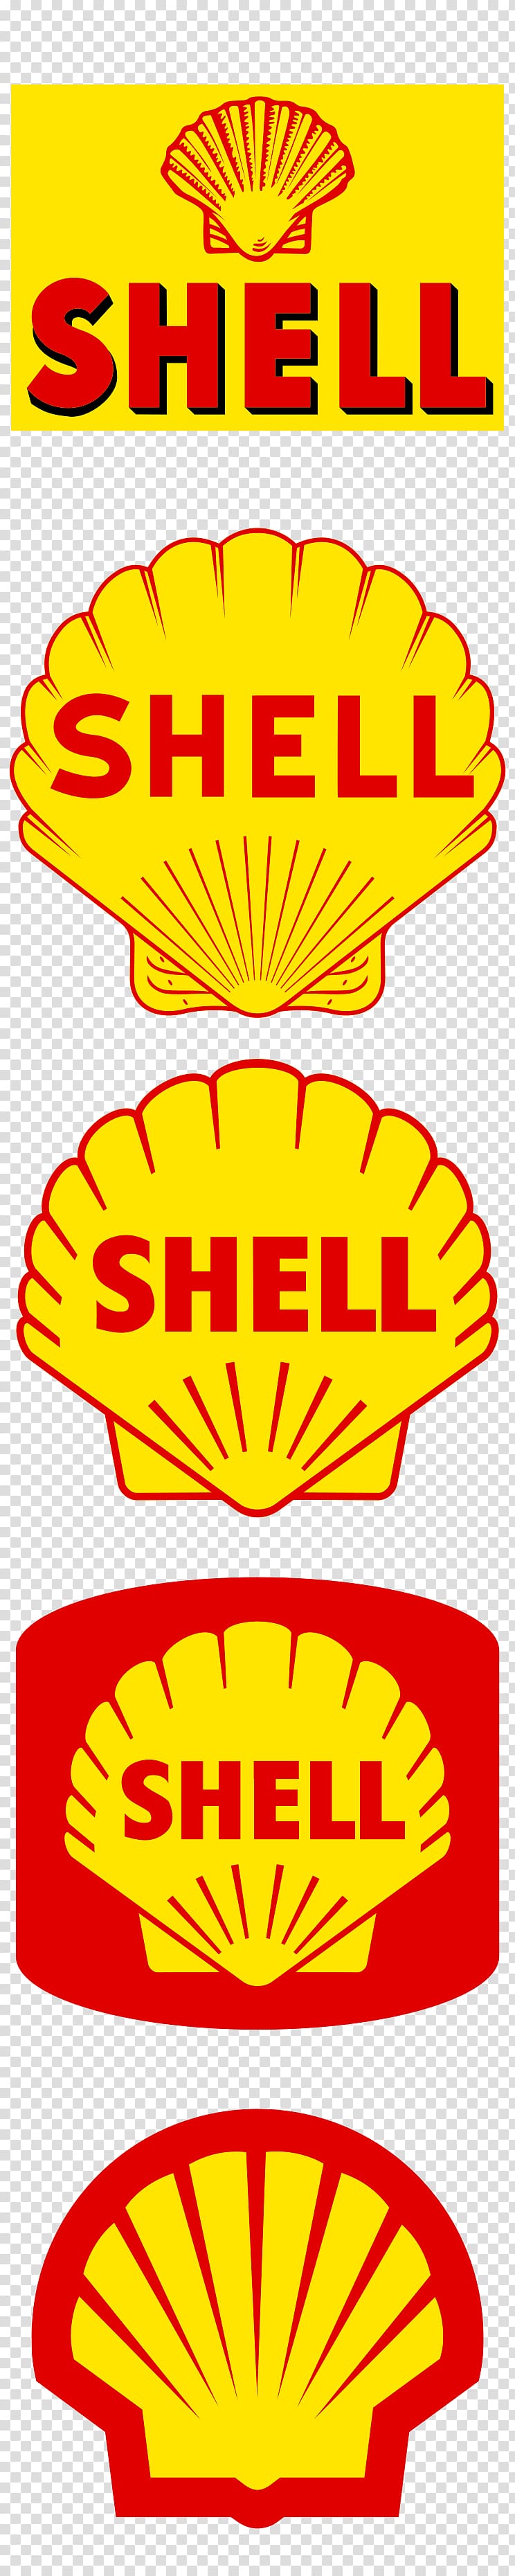 Chevron Corporation Royal Dutch Shell Logo Standard Oil Petroleum, Royal Dutch Shell transparent background PNG clipart